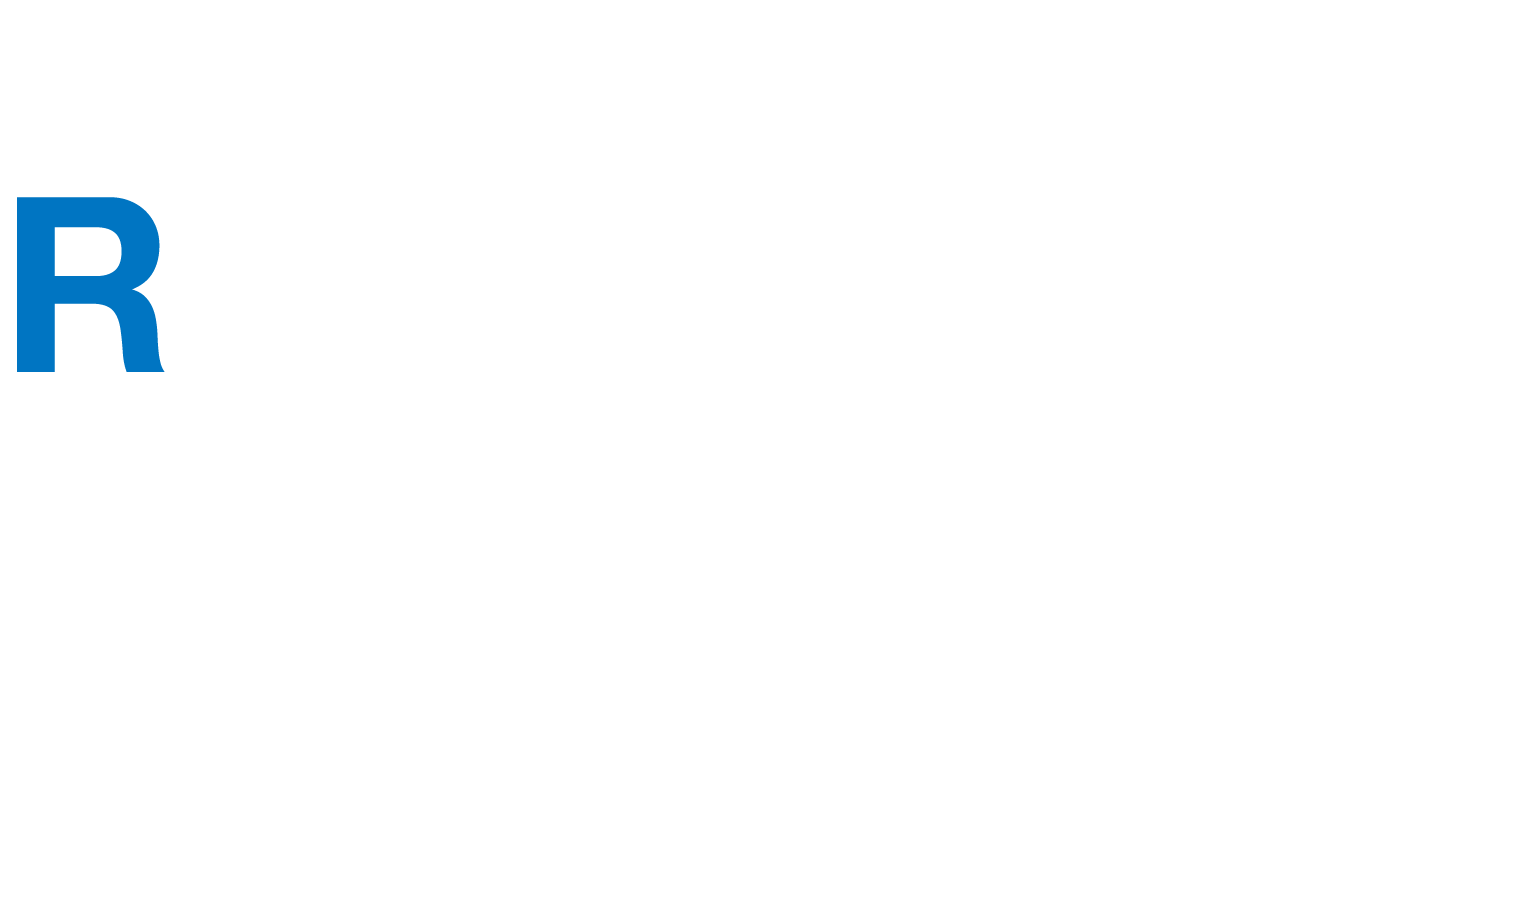 WE ARE ROBOTT SYSTEM INTEGRATOR